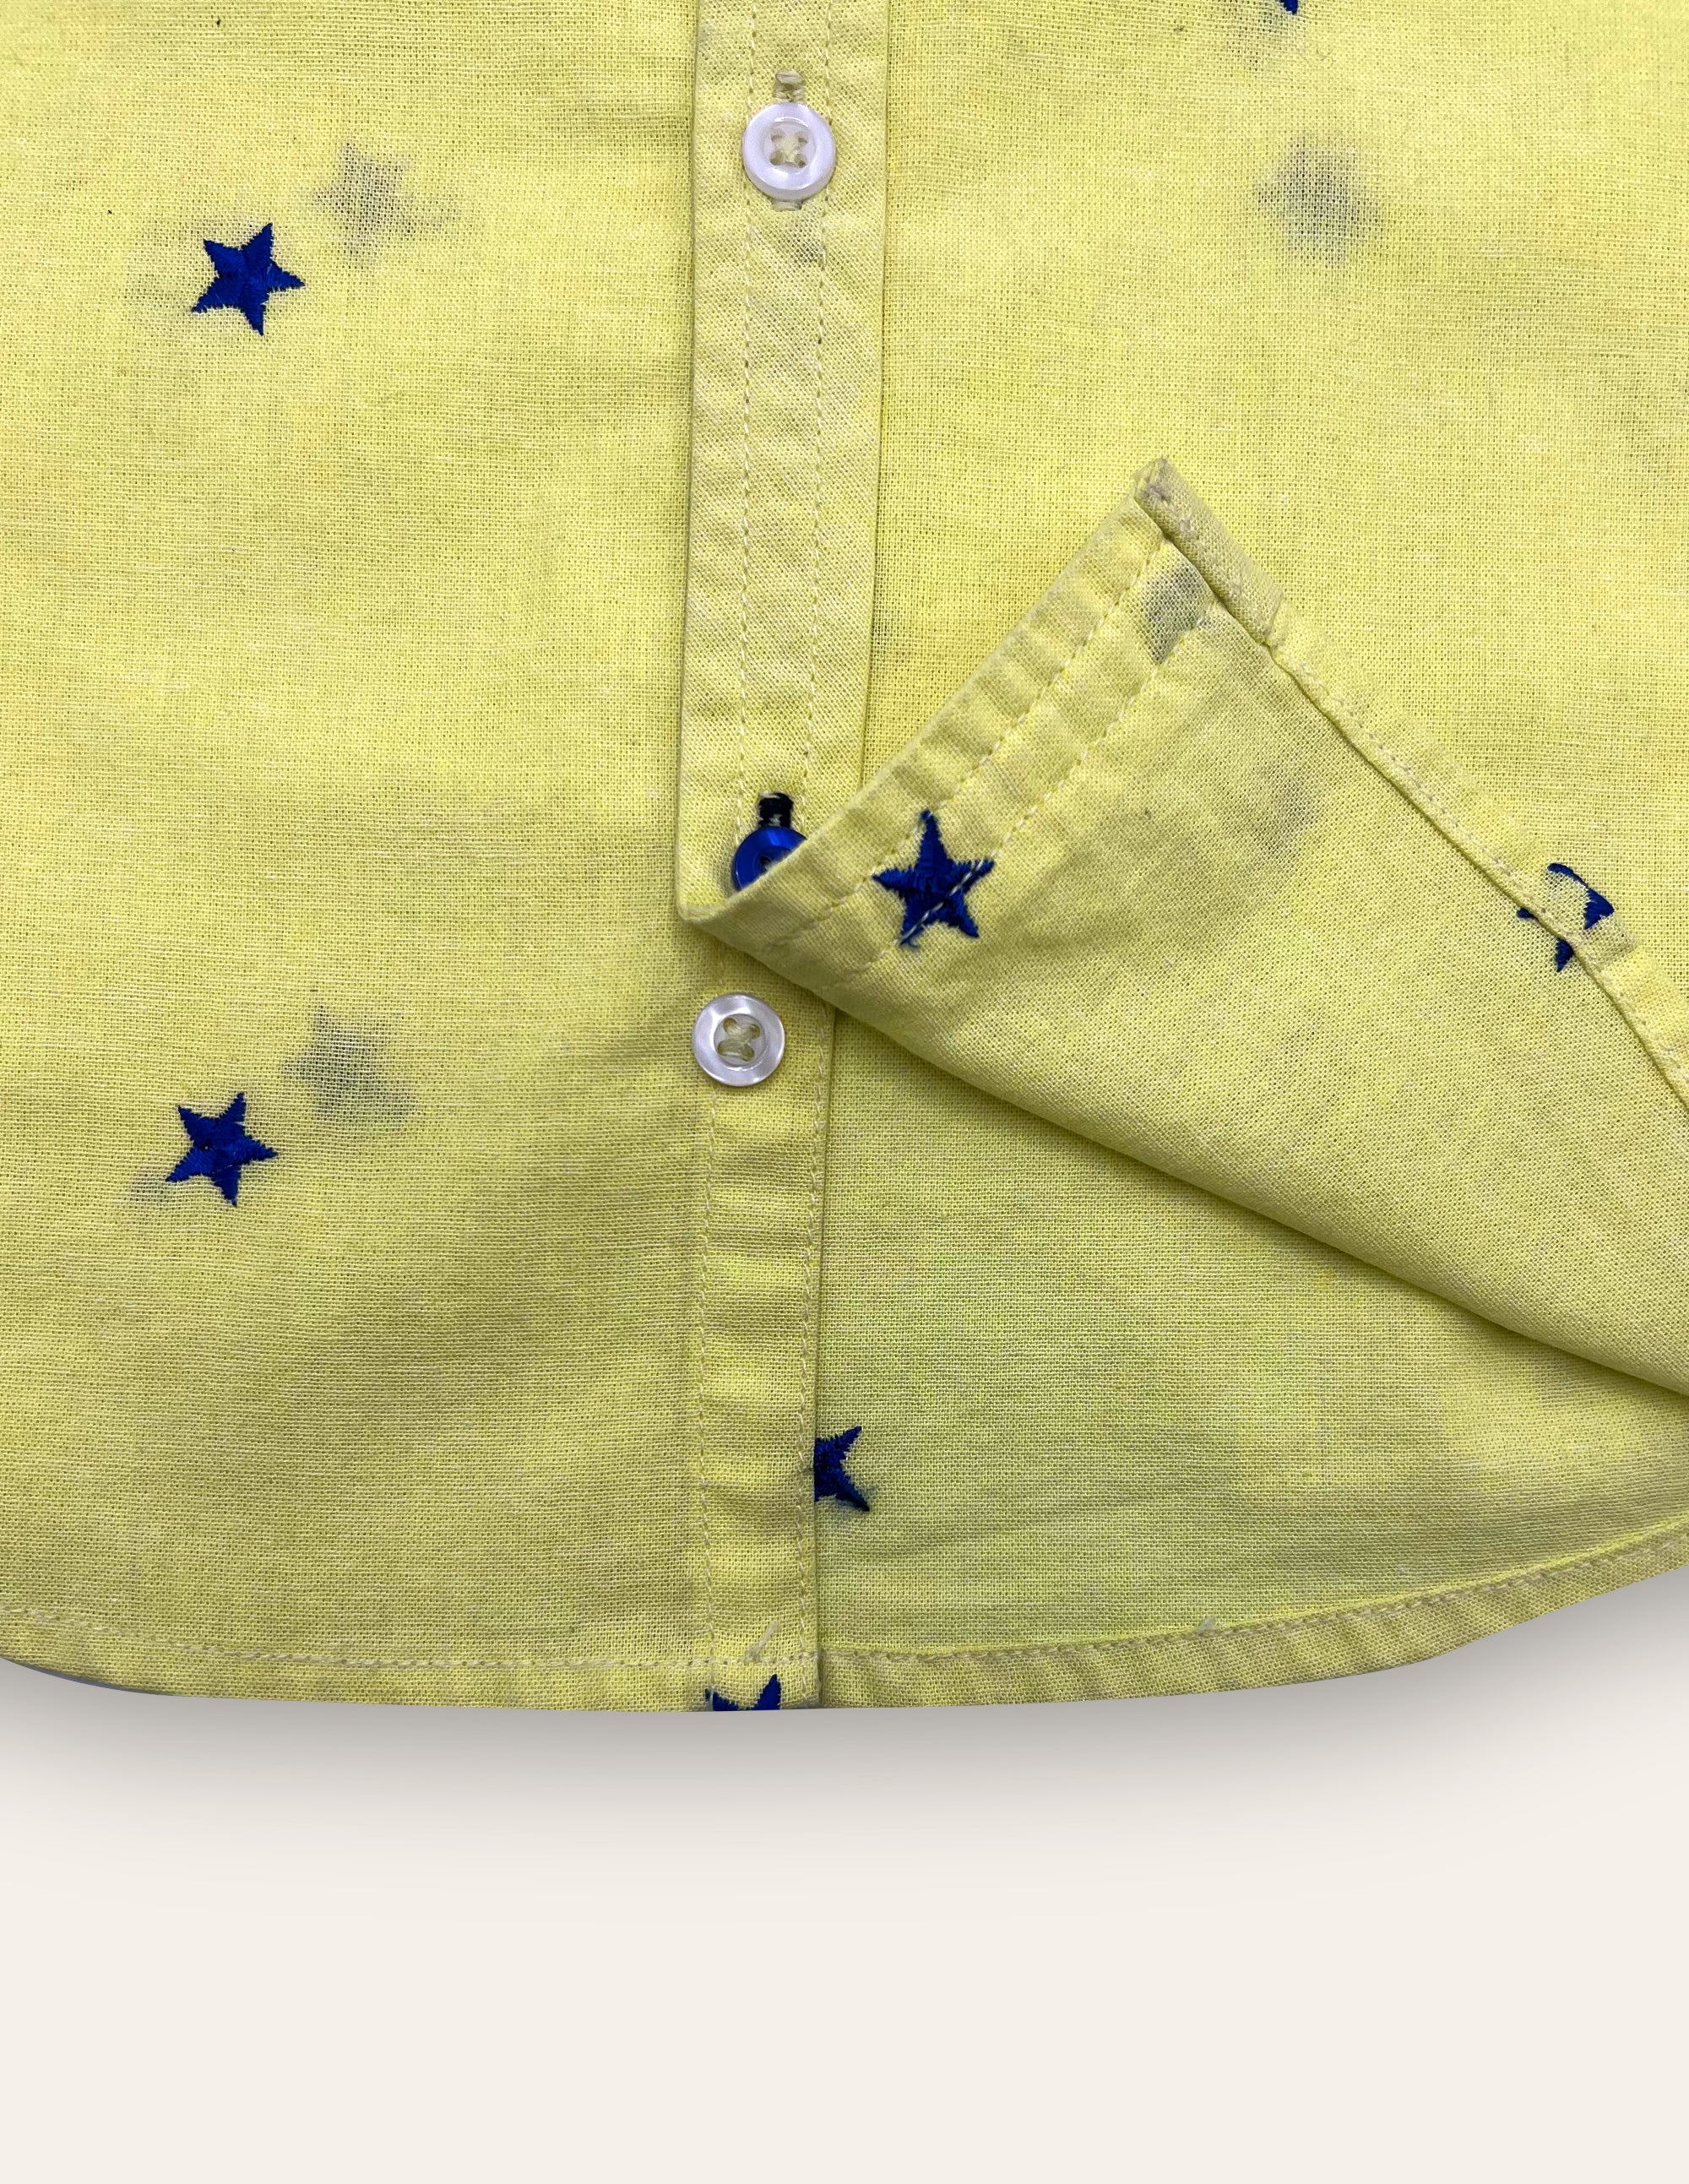 Boys Star Embroidered Yellow Chambray Shirt